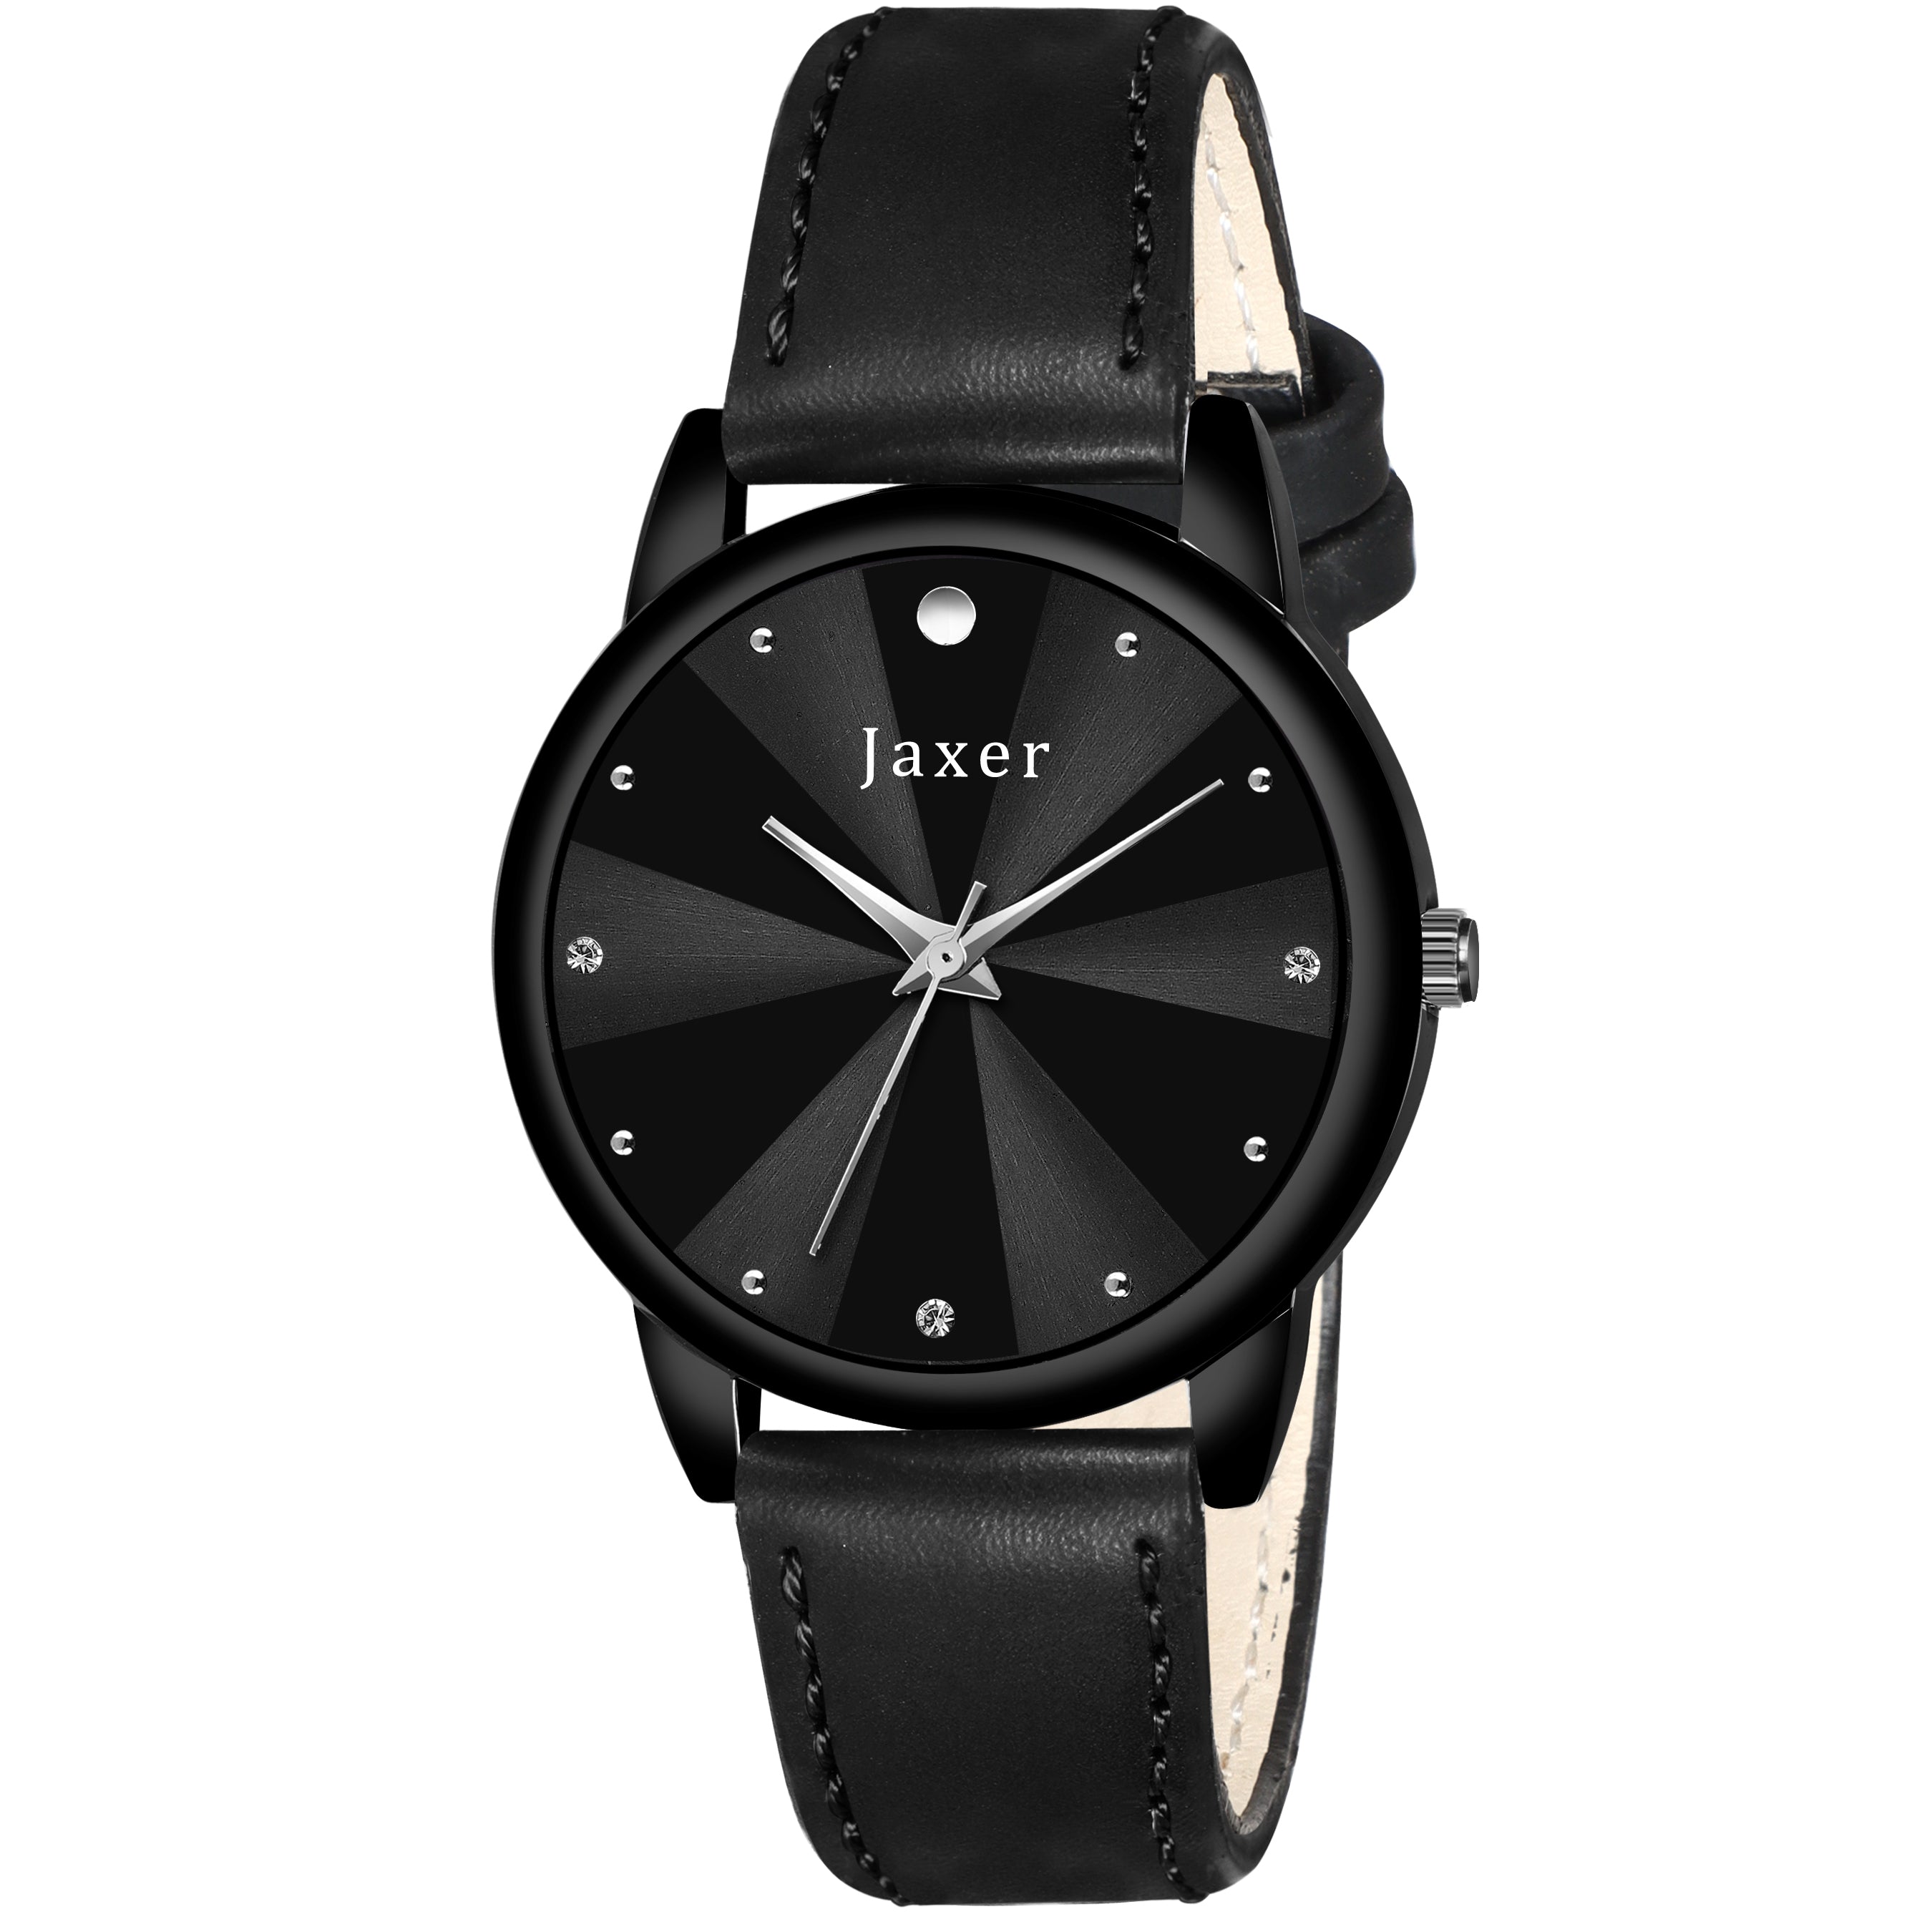 Jaxer Black Leather Strap Analog Wrist Watch for Women - JXRW2573 - Jainx Store